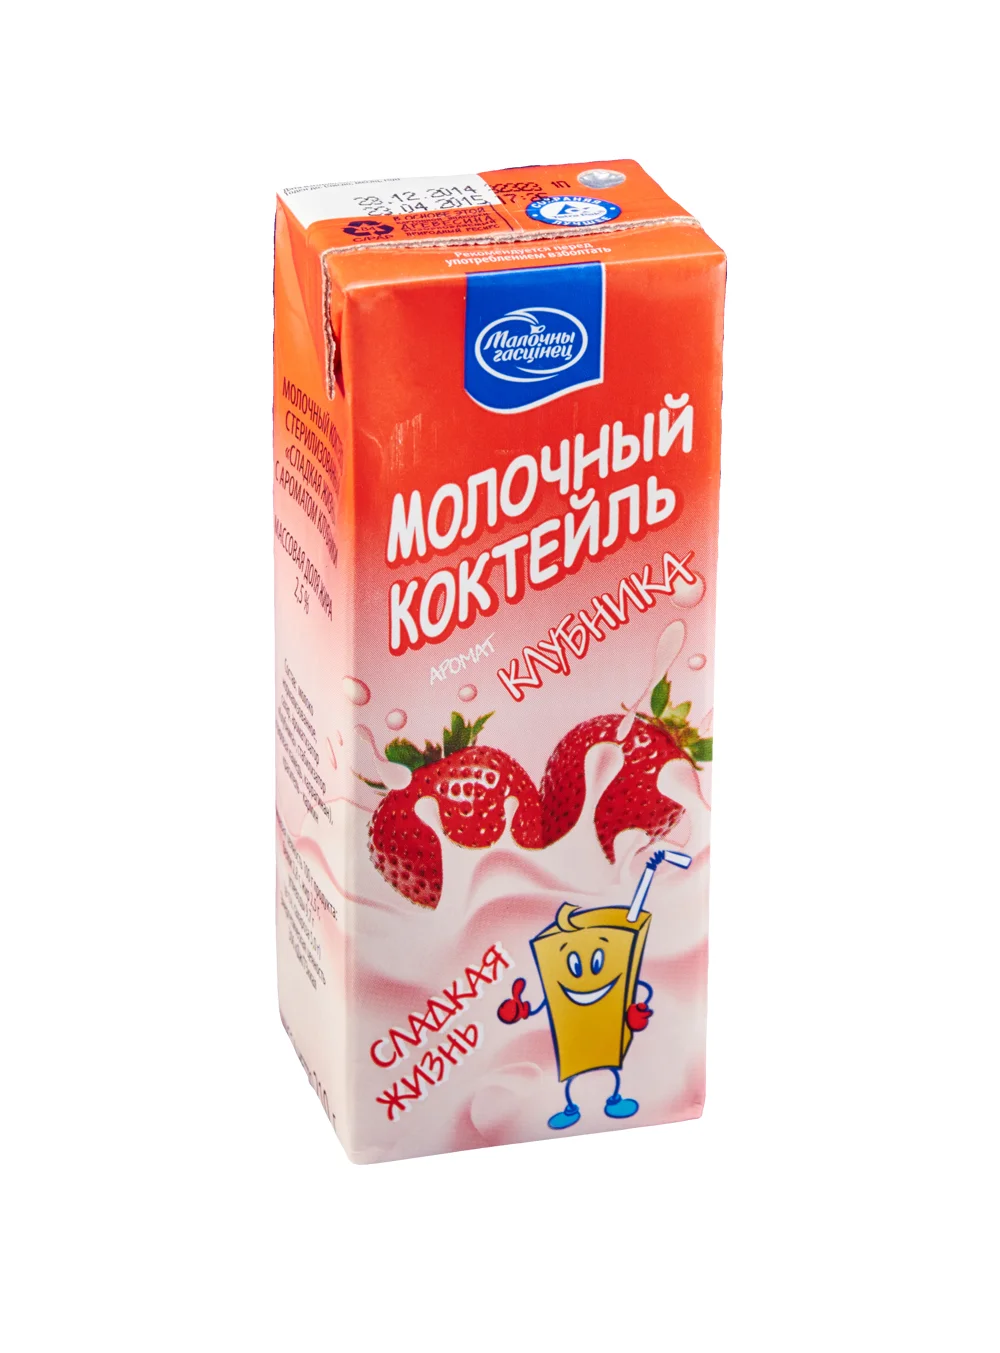 Milkshake with strawberry flavor